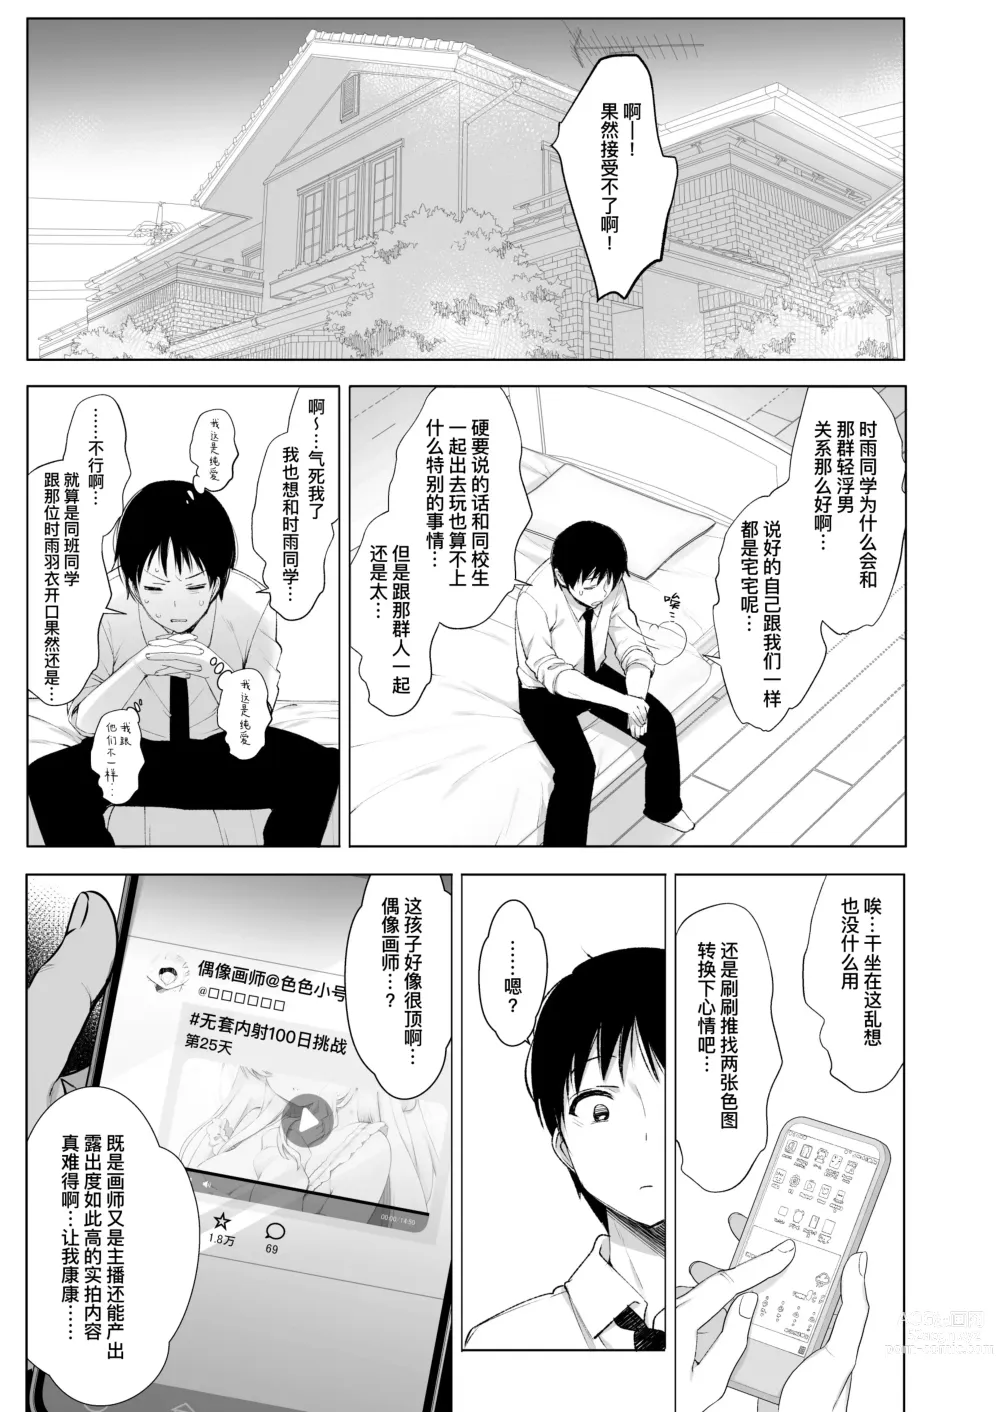 Page 8 of doujinshi 偶像主播时雨羽衣的秘密视频发布2